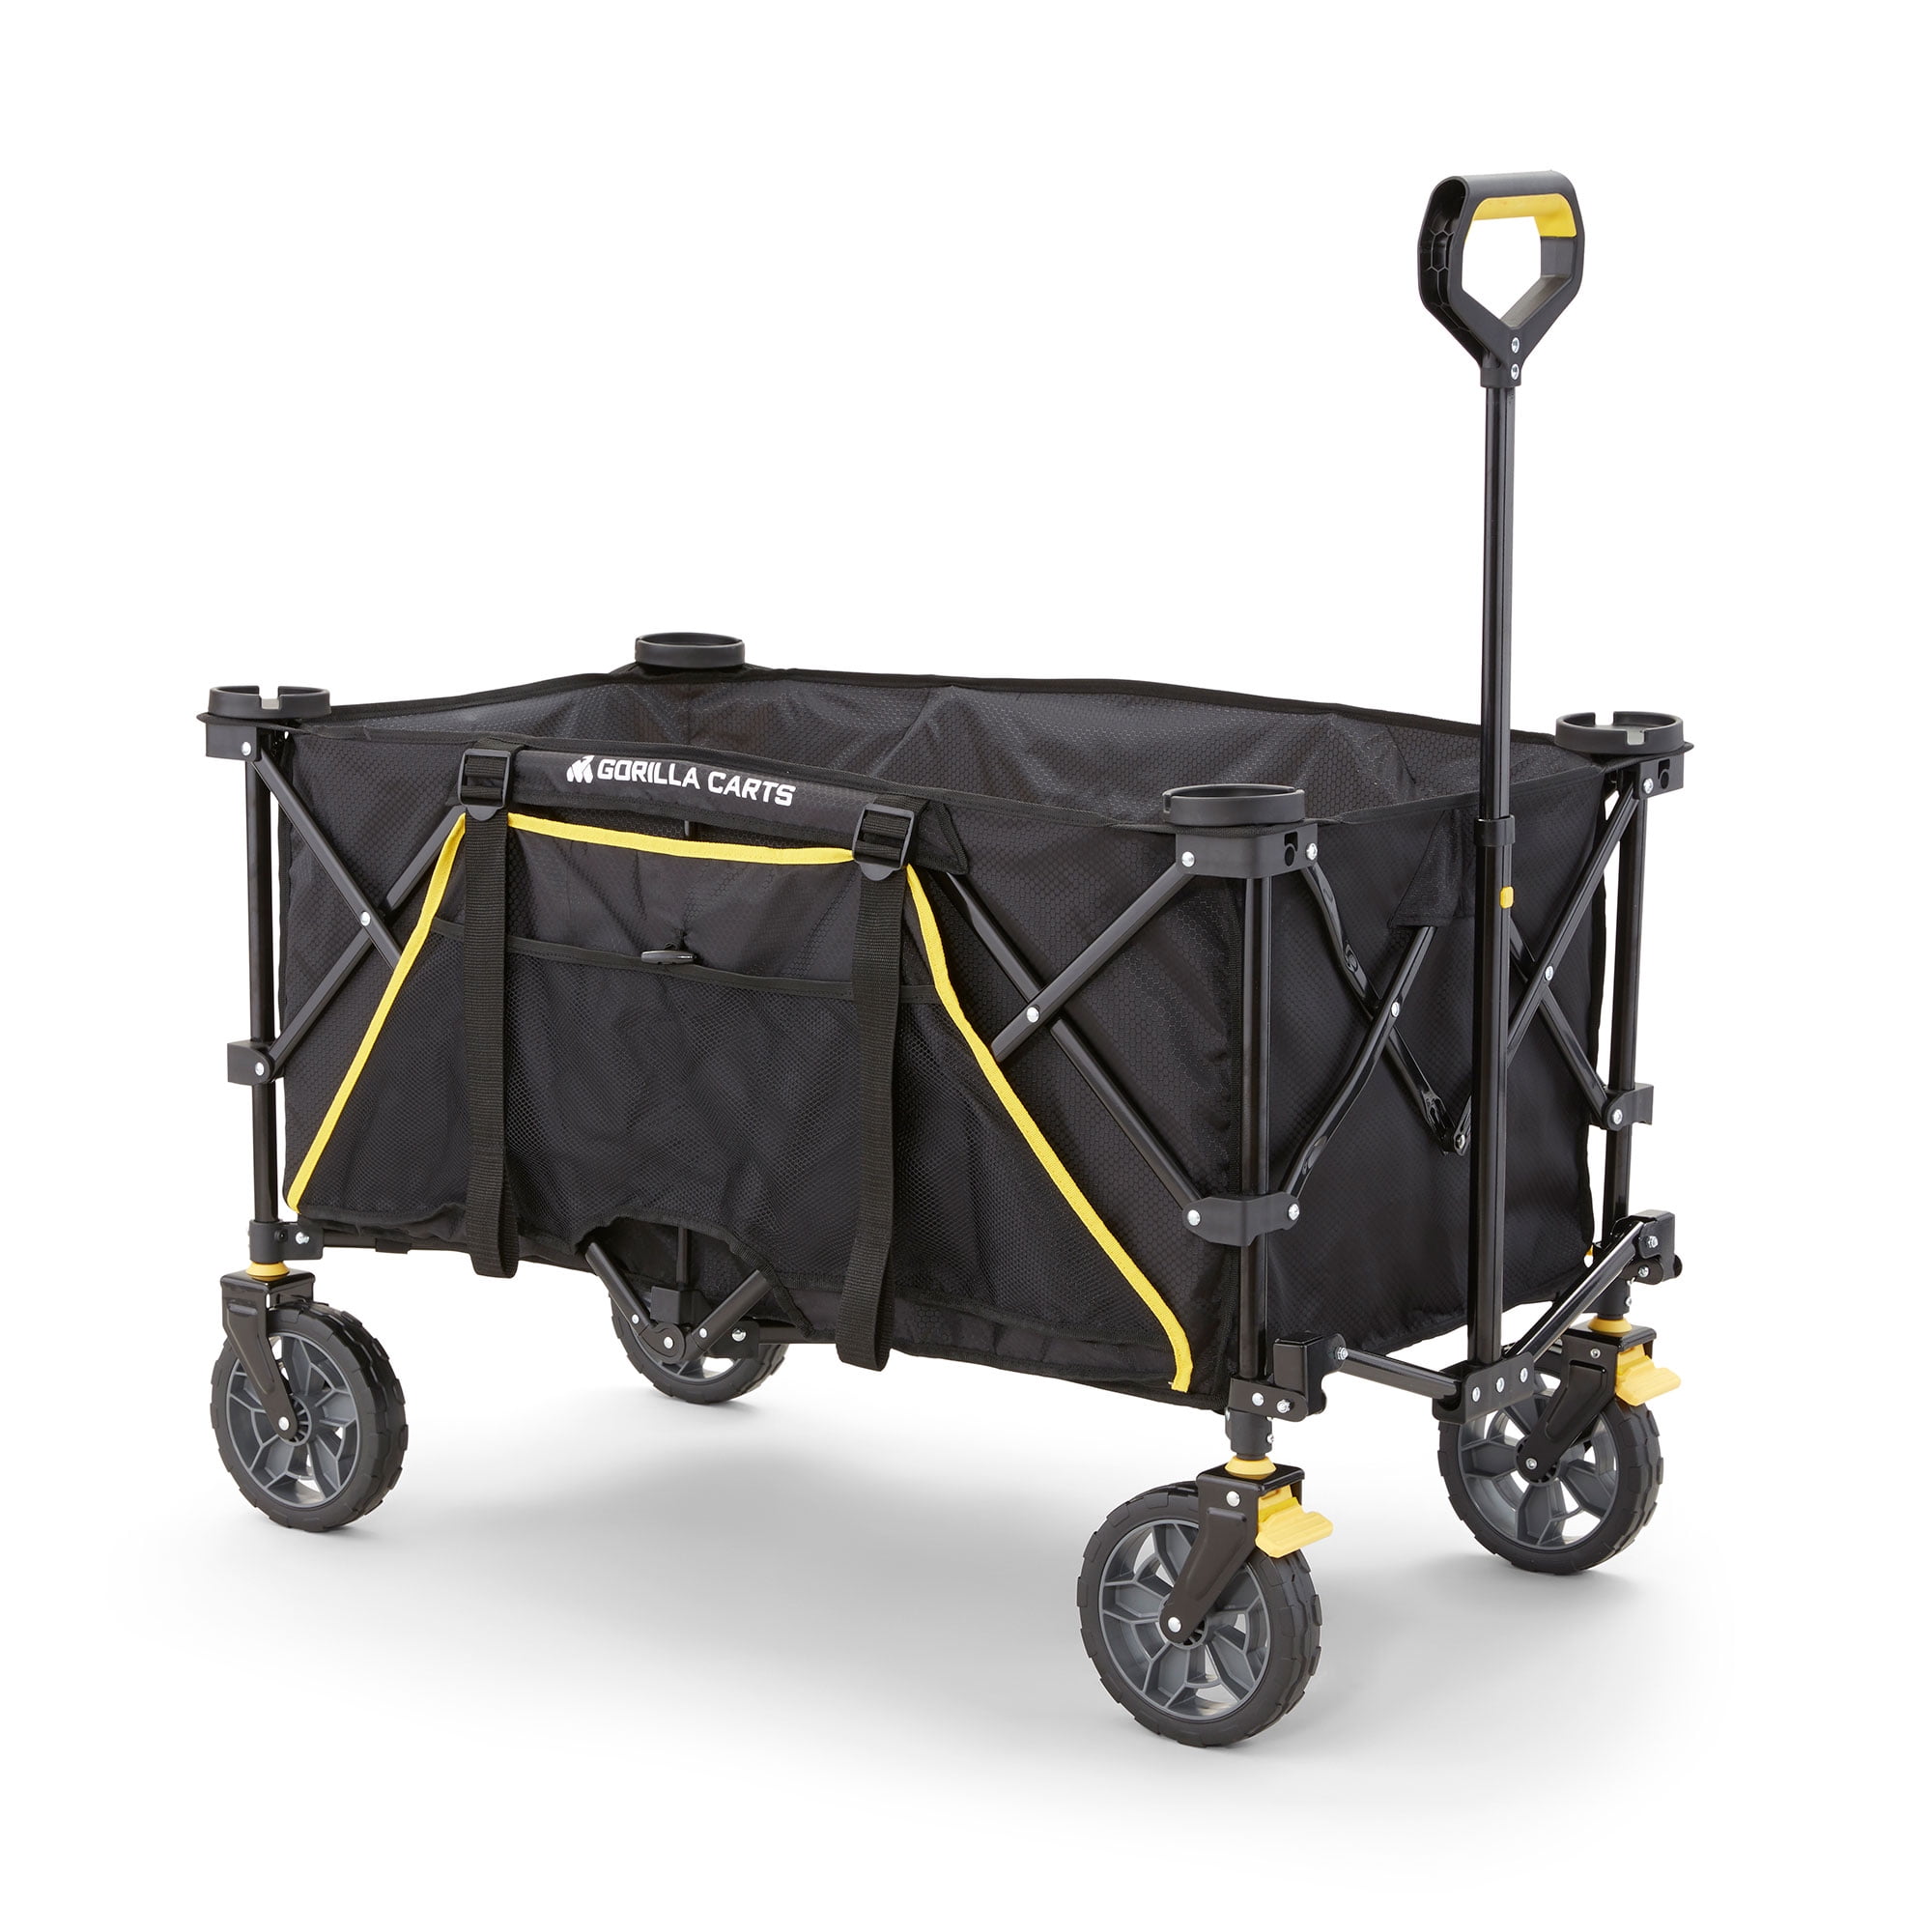 NEW Folding Wagon portable Gray for outdoor beach park 